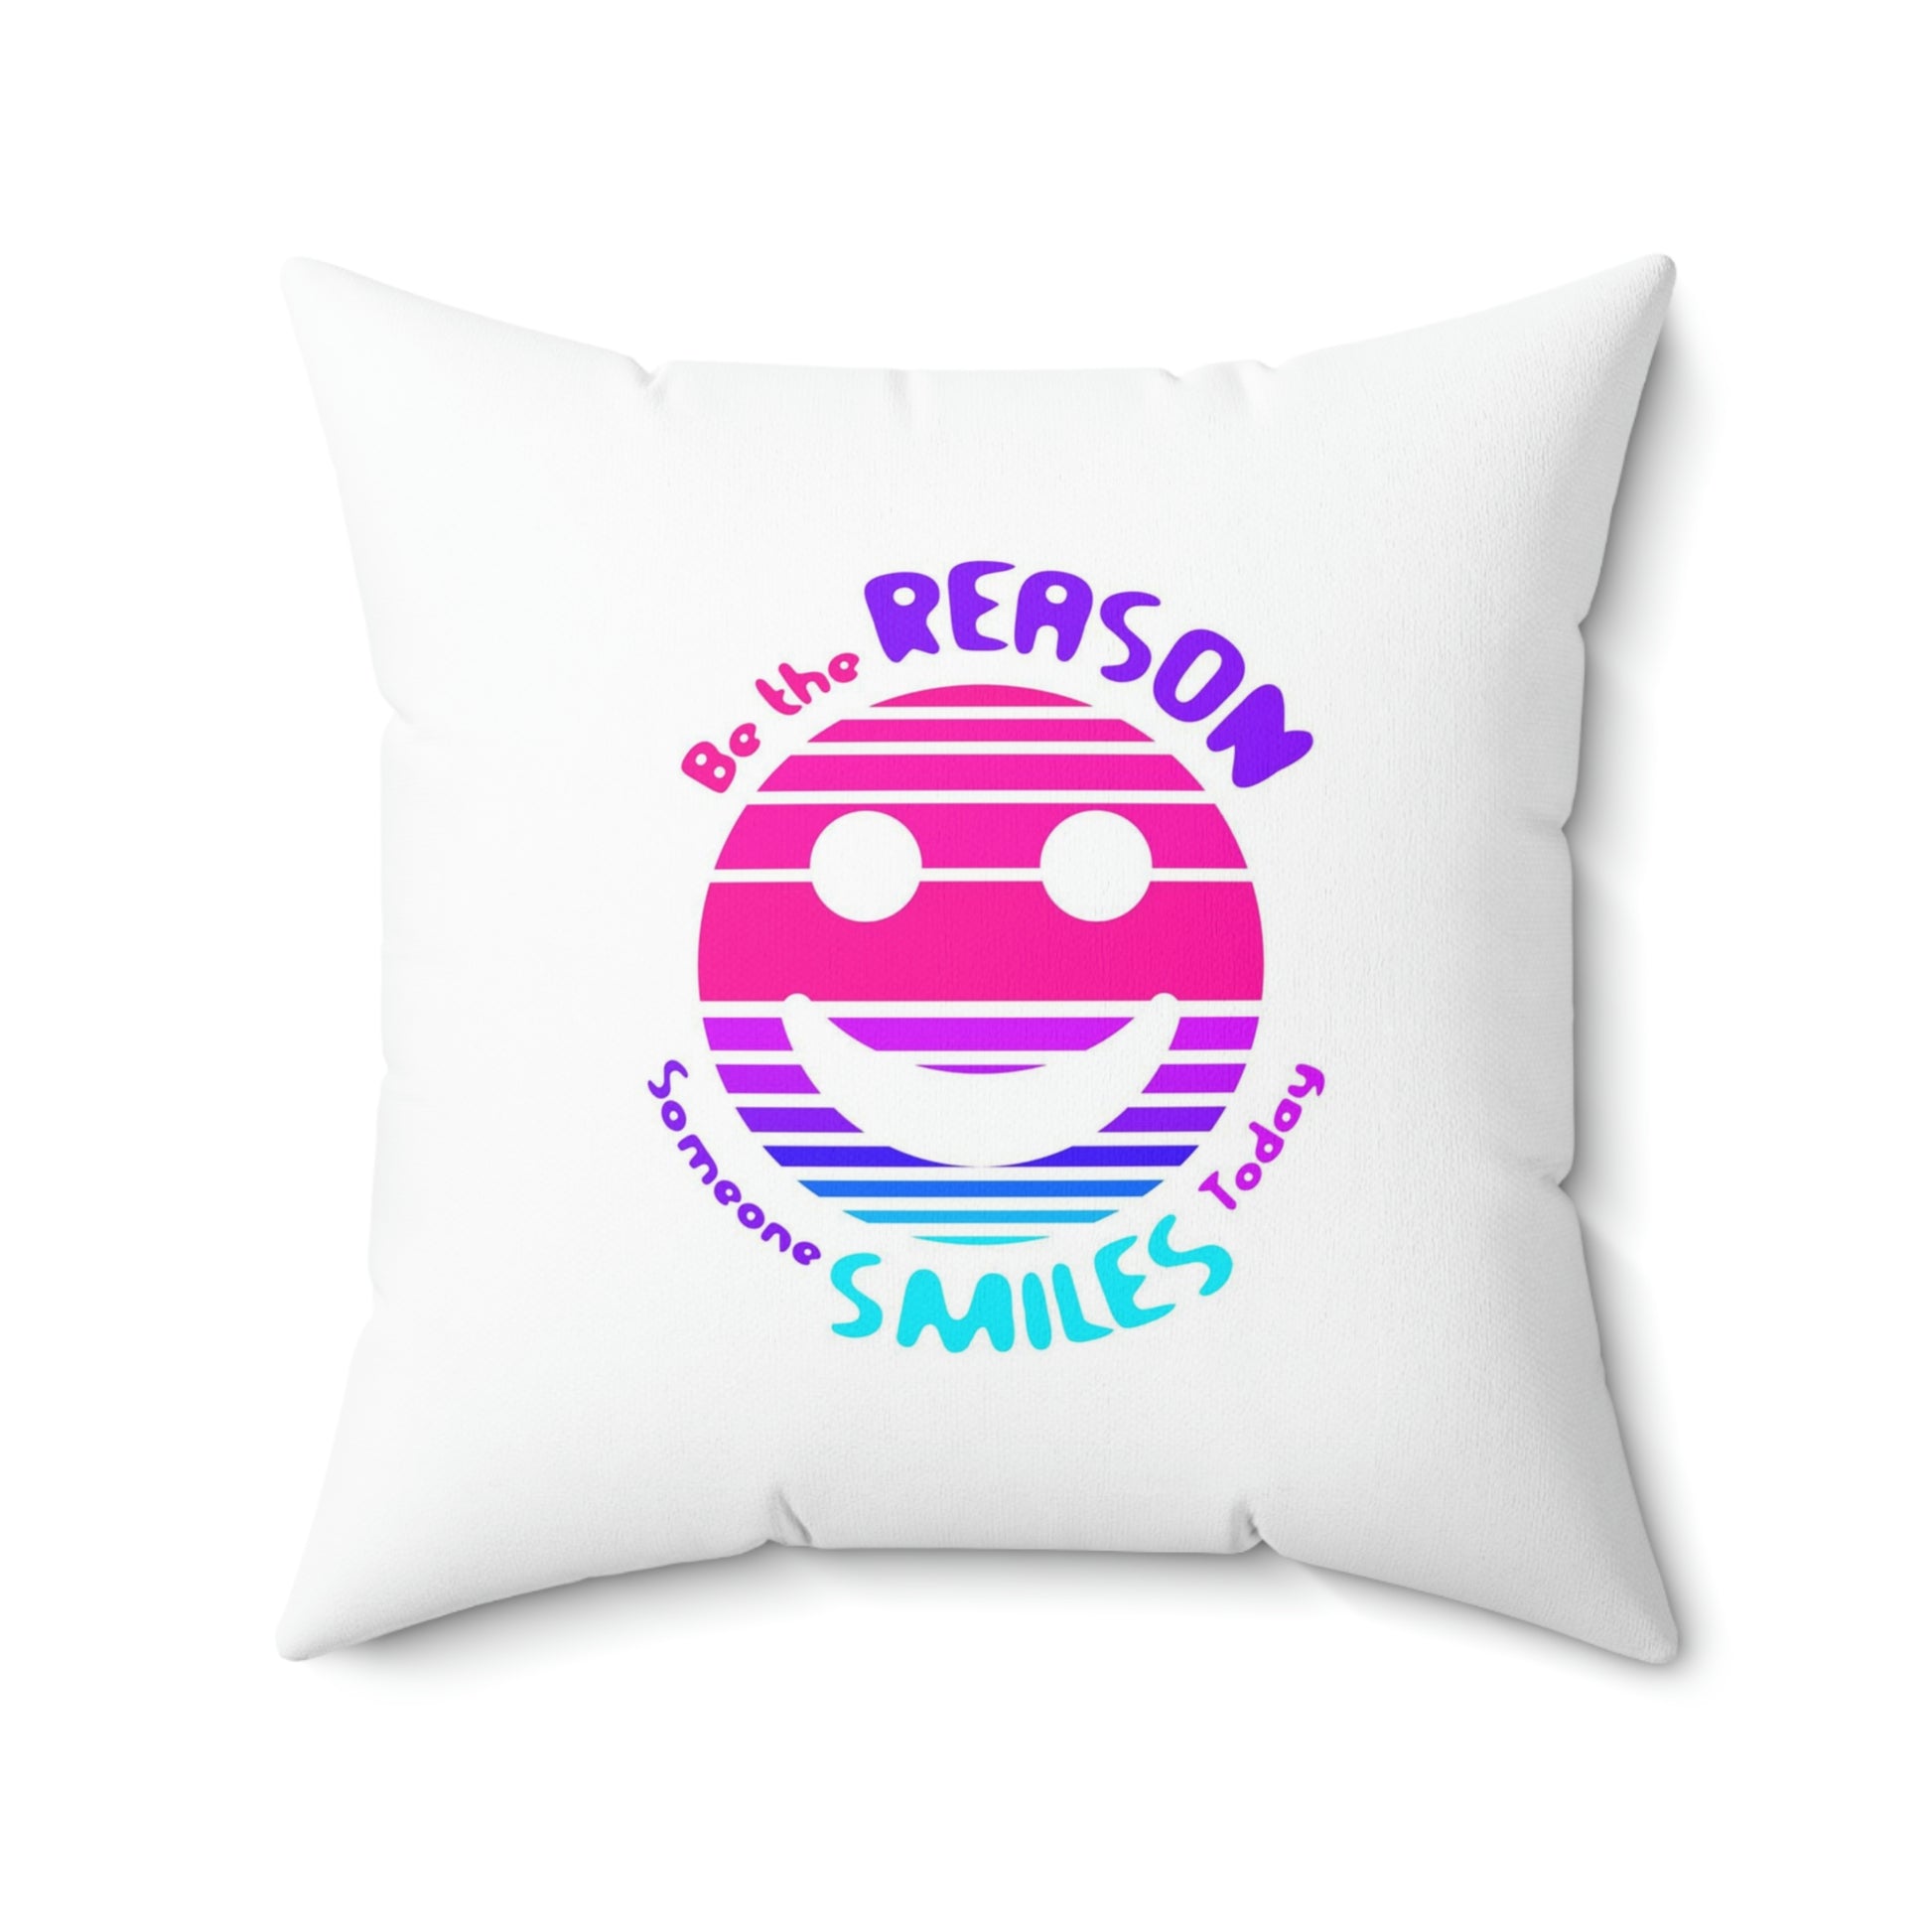 BeThe Reason Someone Smilles Today Motivational White Spun Polyester Square Pillow